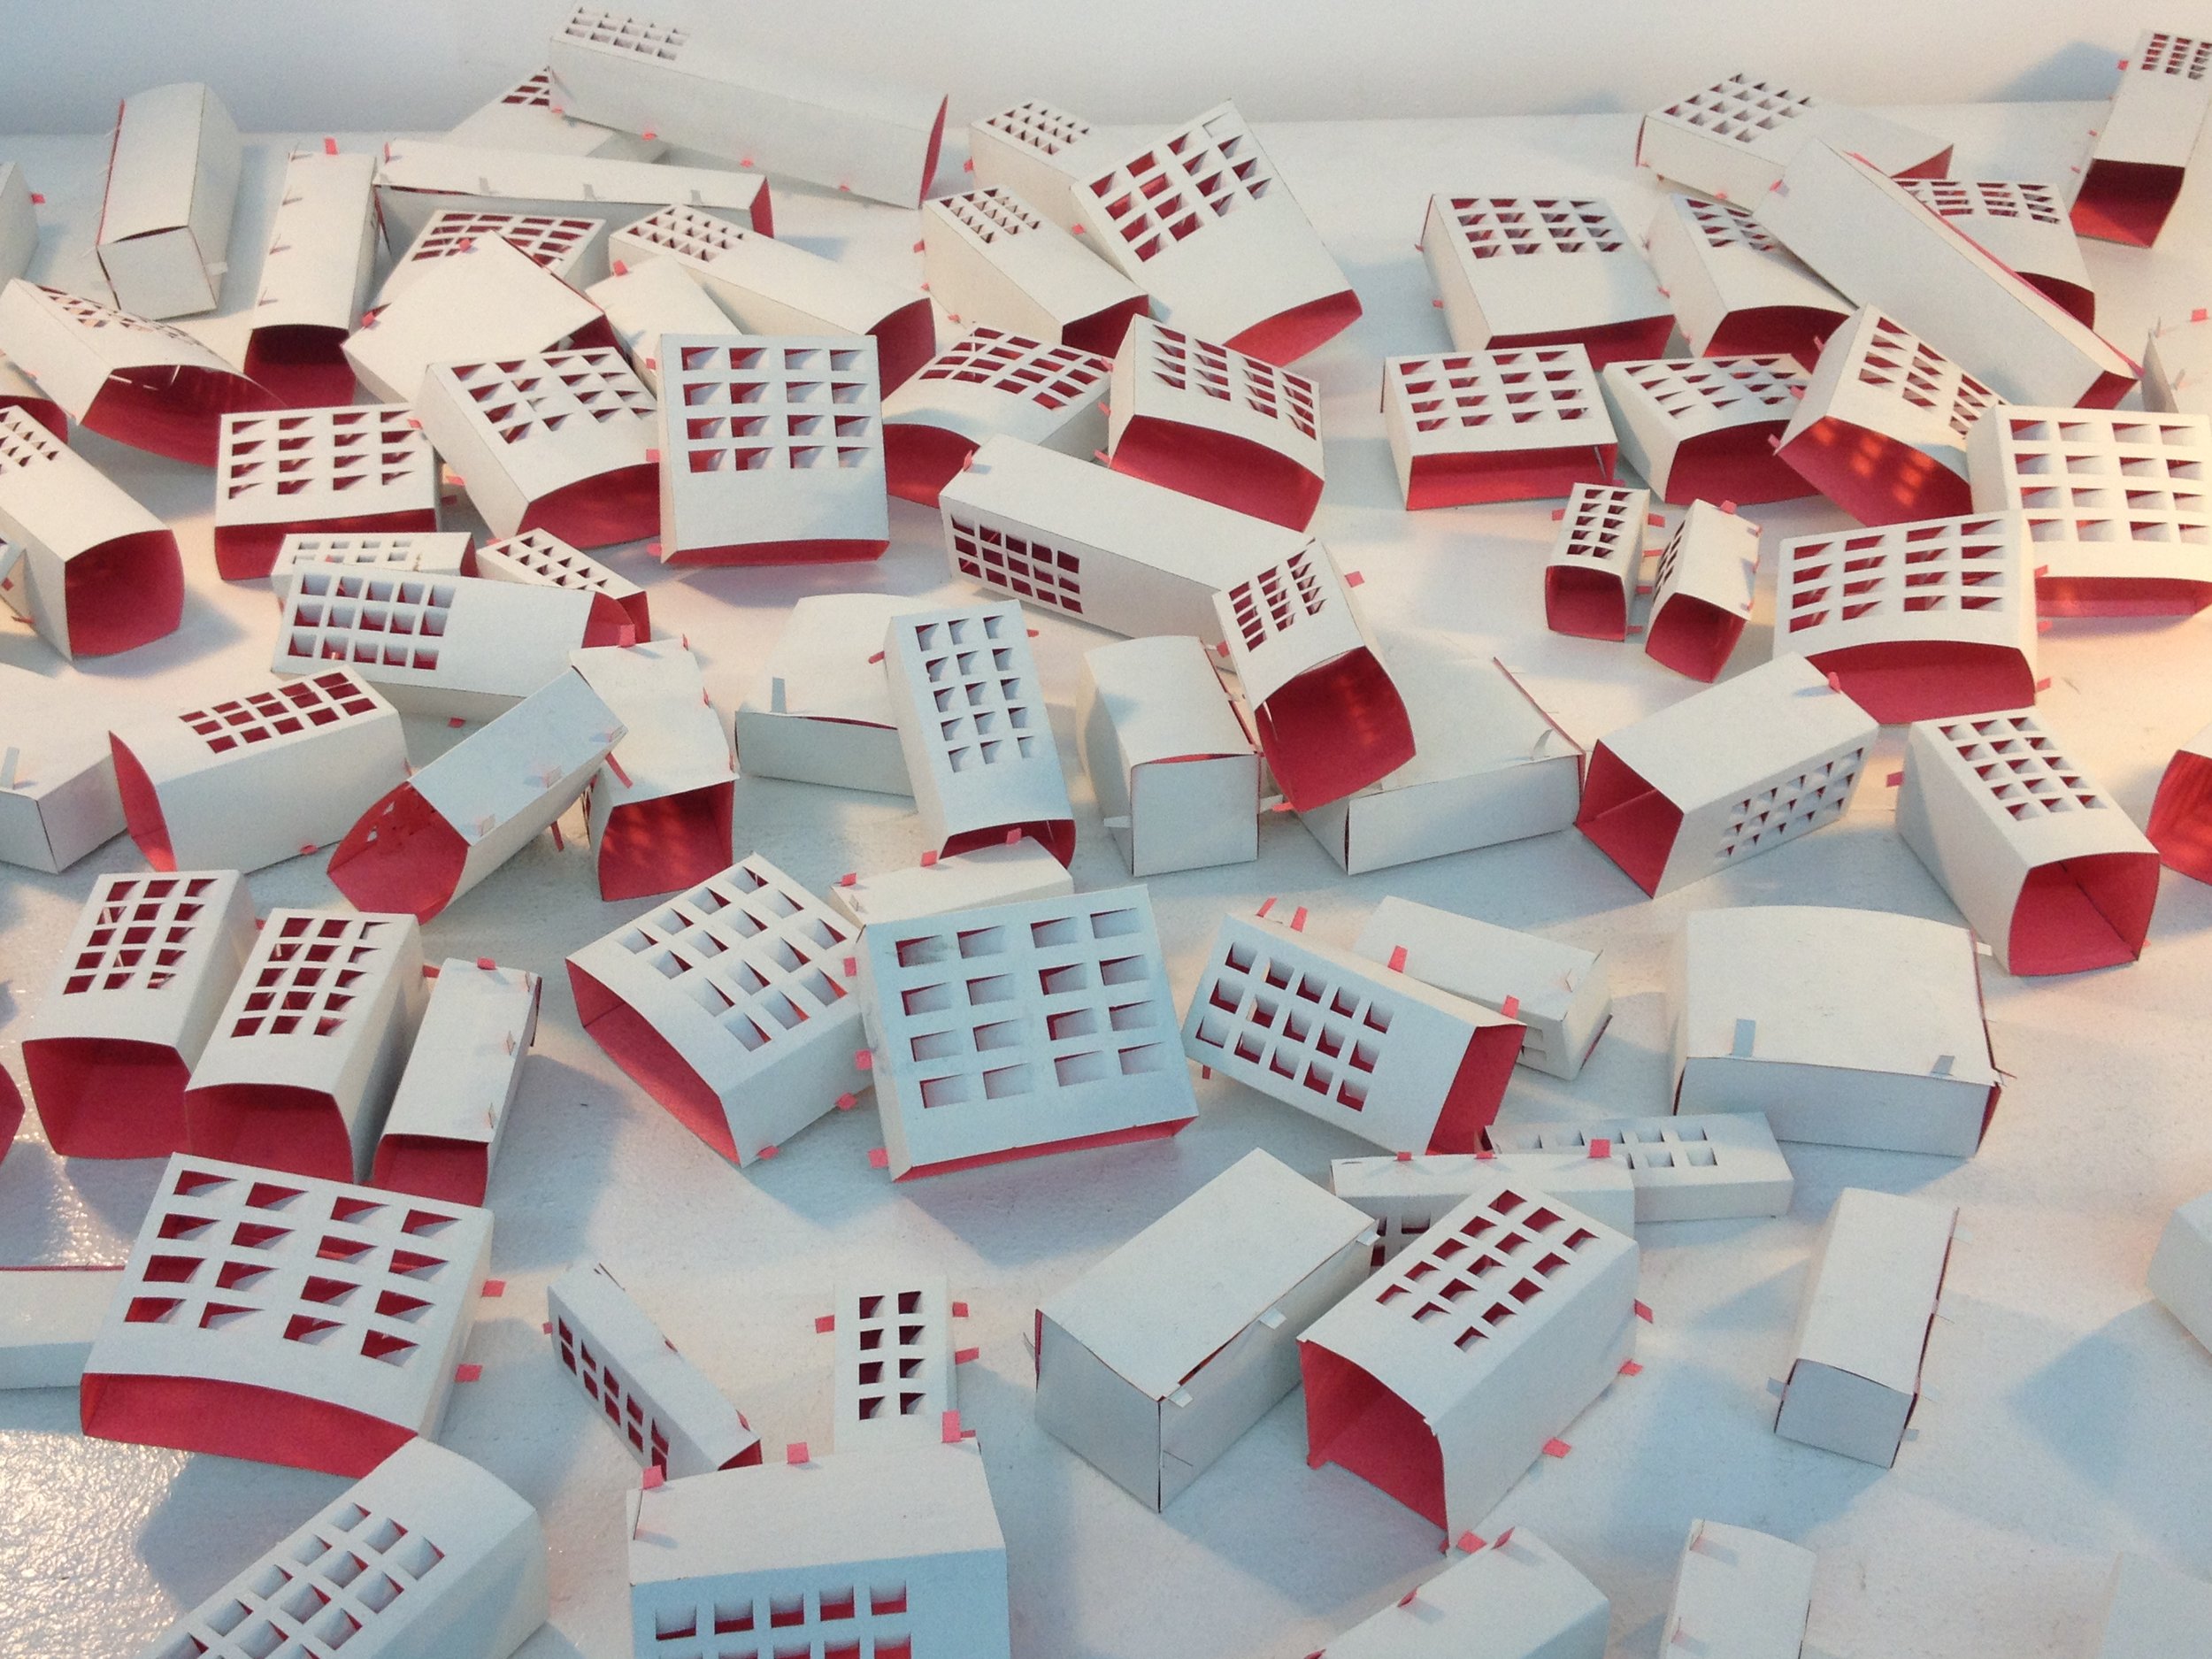 Paper building forms, 2016